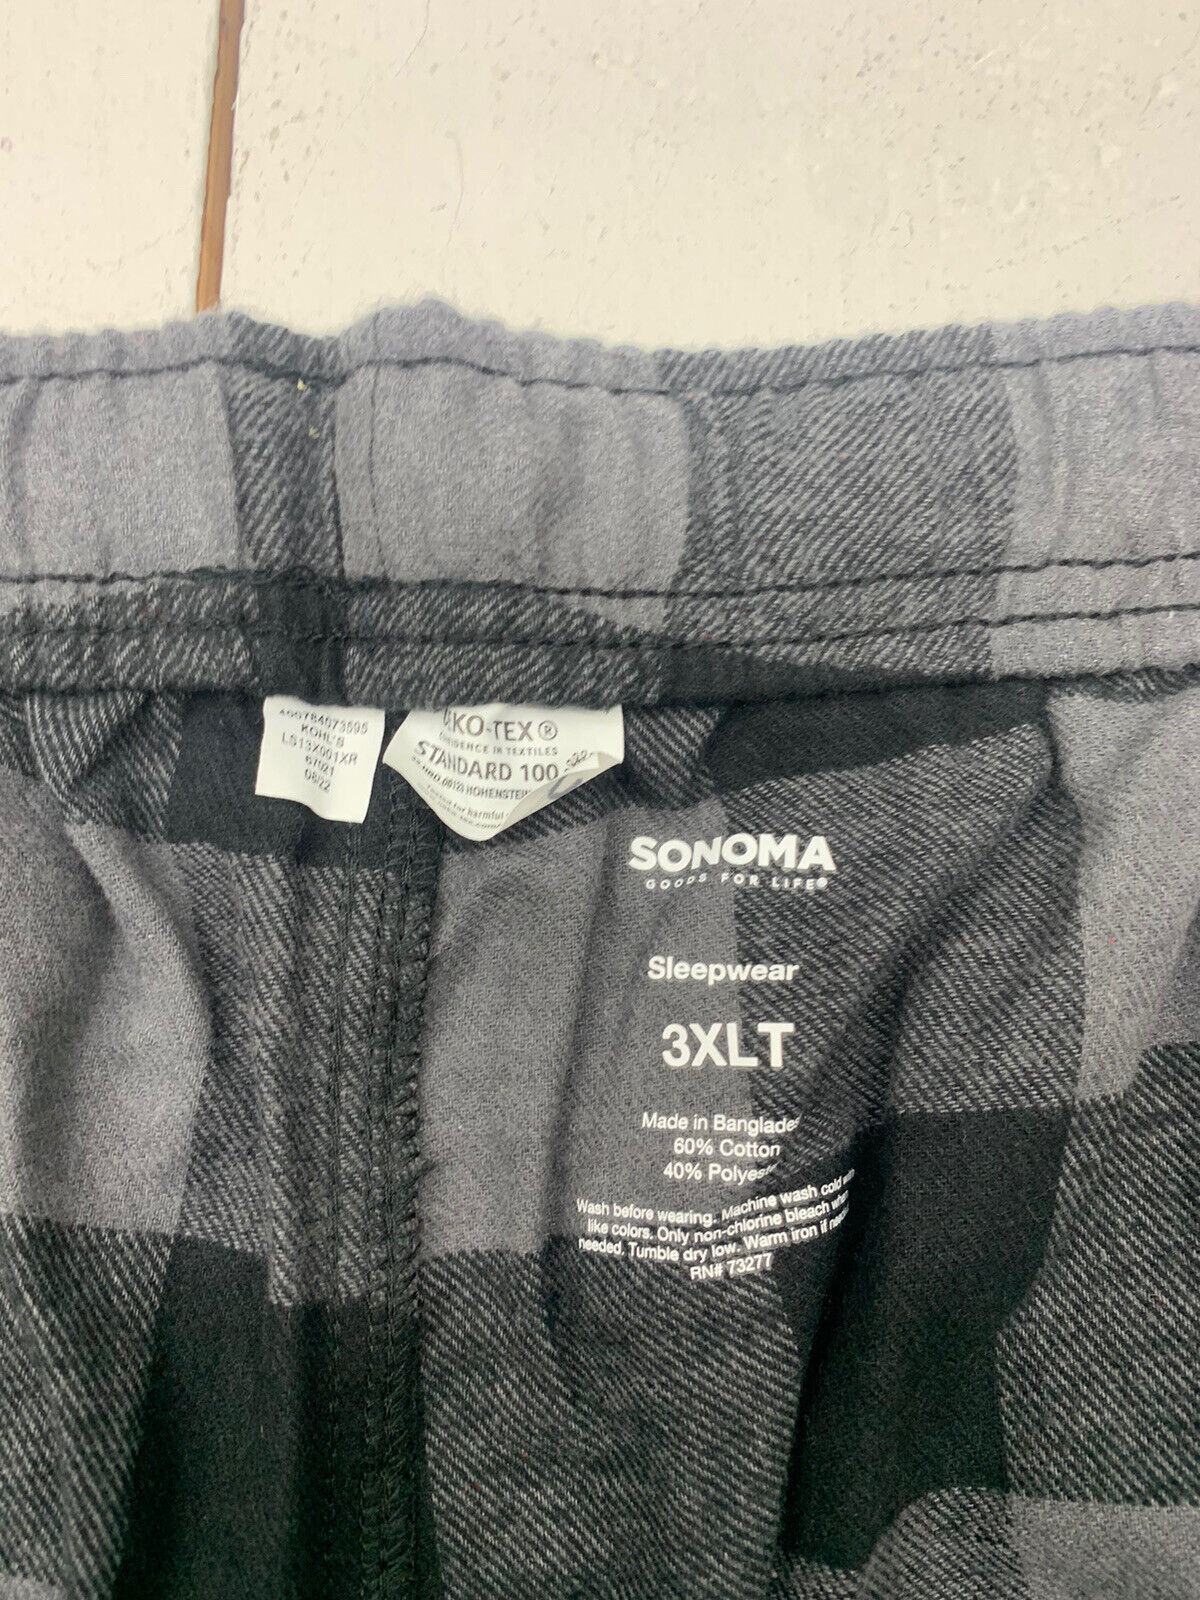 Sonoma black and white Buffalo plaid pajama pants, XXL NWT